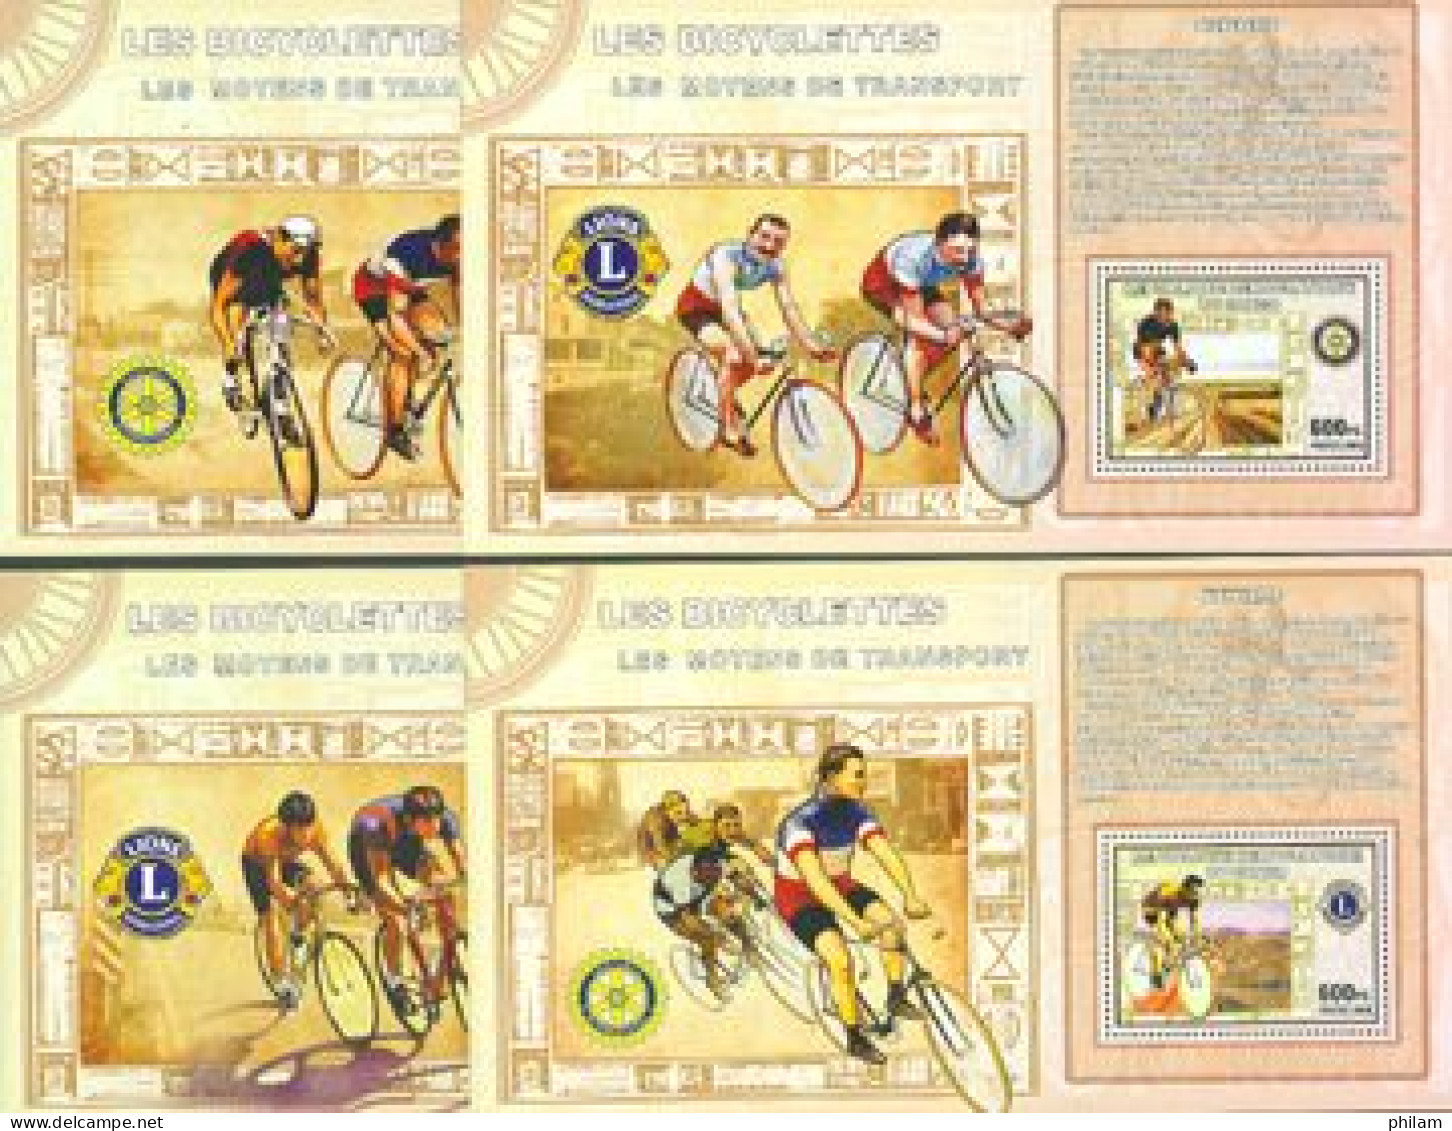 CONGO KINSHASA 2006 - Les Bicyclettes - Lions Club Et Rotary - 4 BF - Cycling